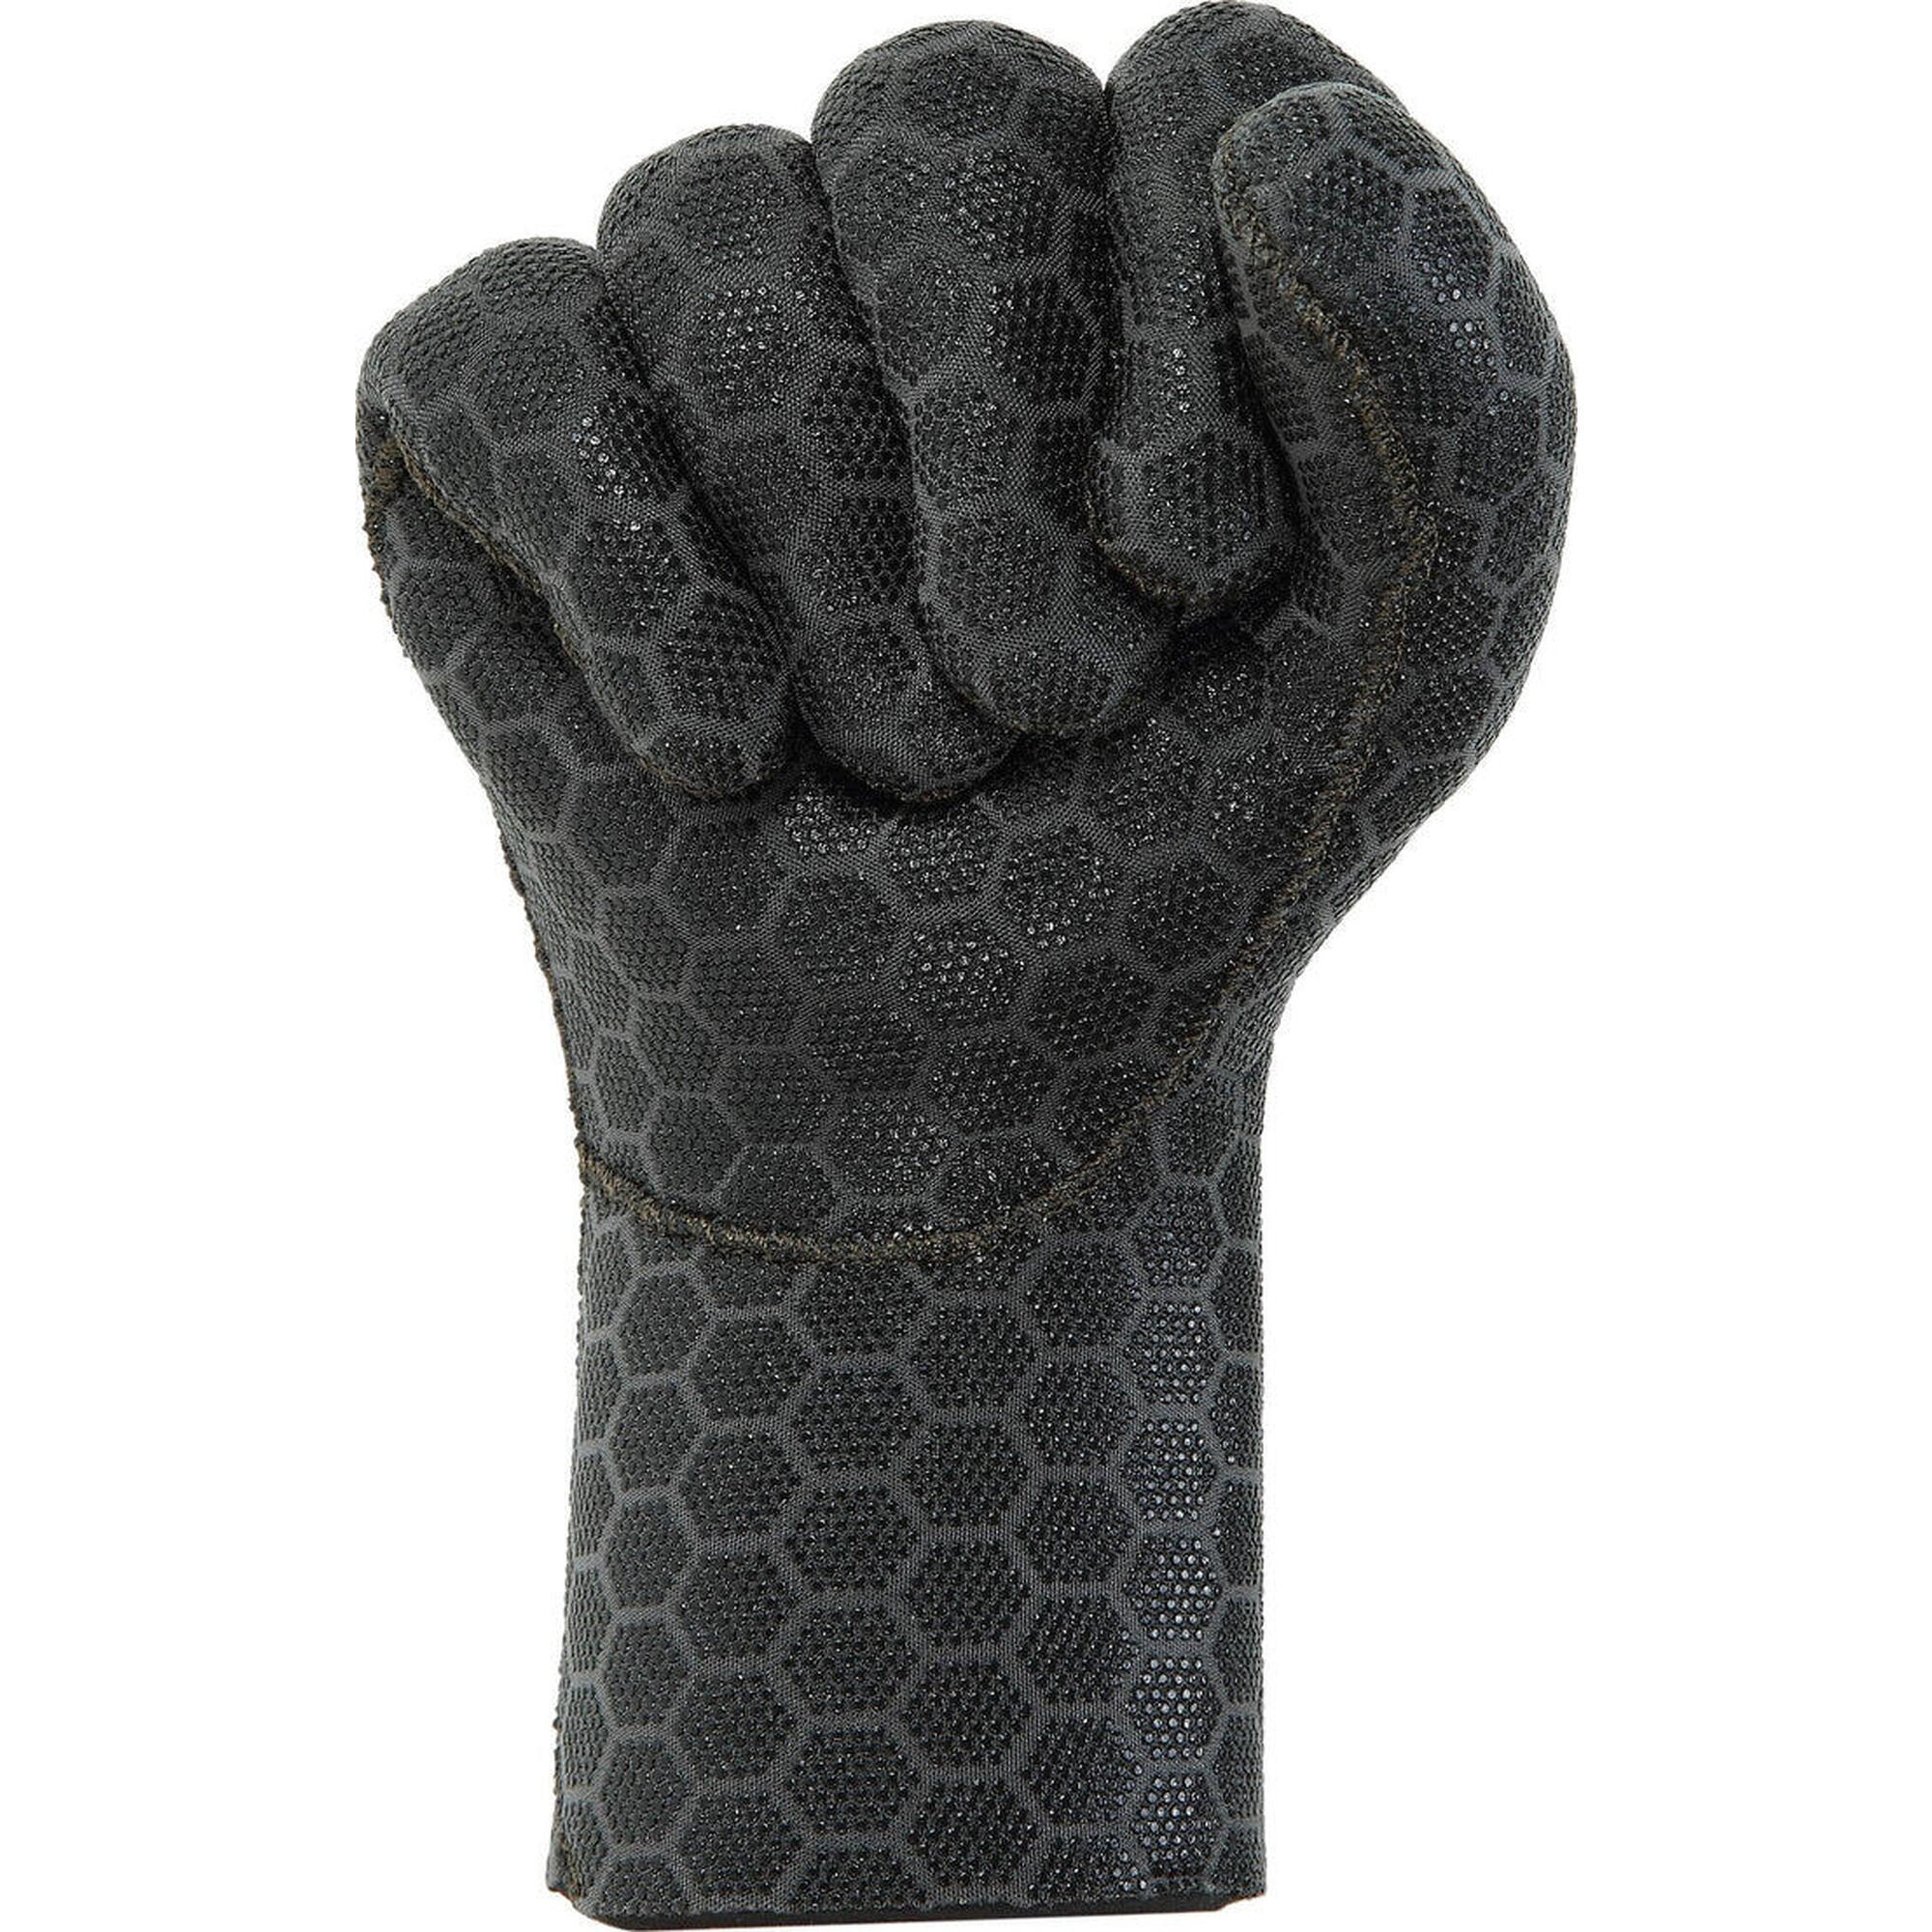 High Stretch Adult Scuba-Diving Gloves - Black XL